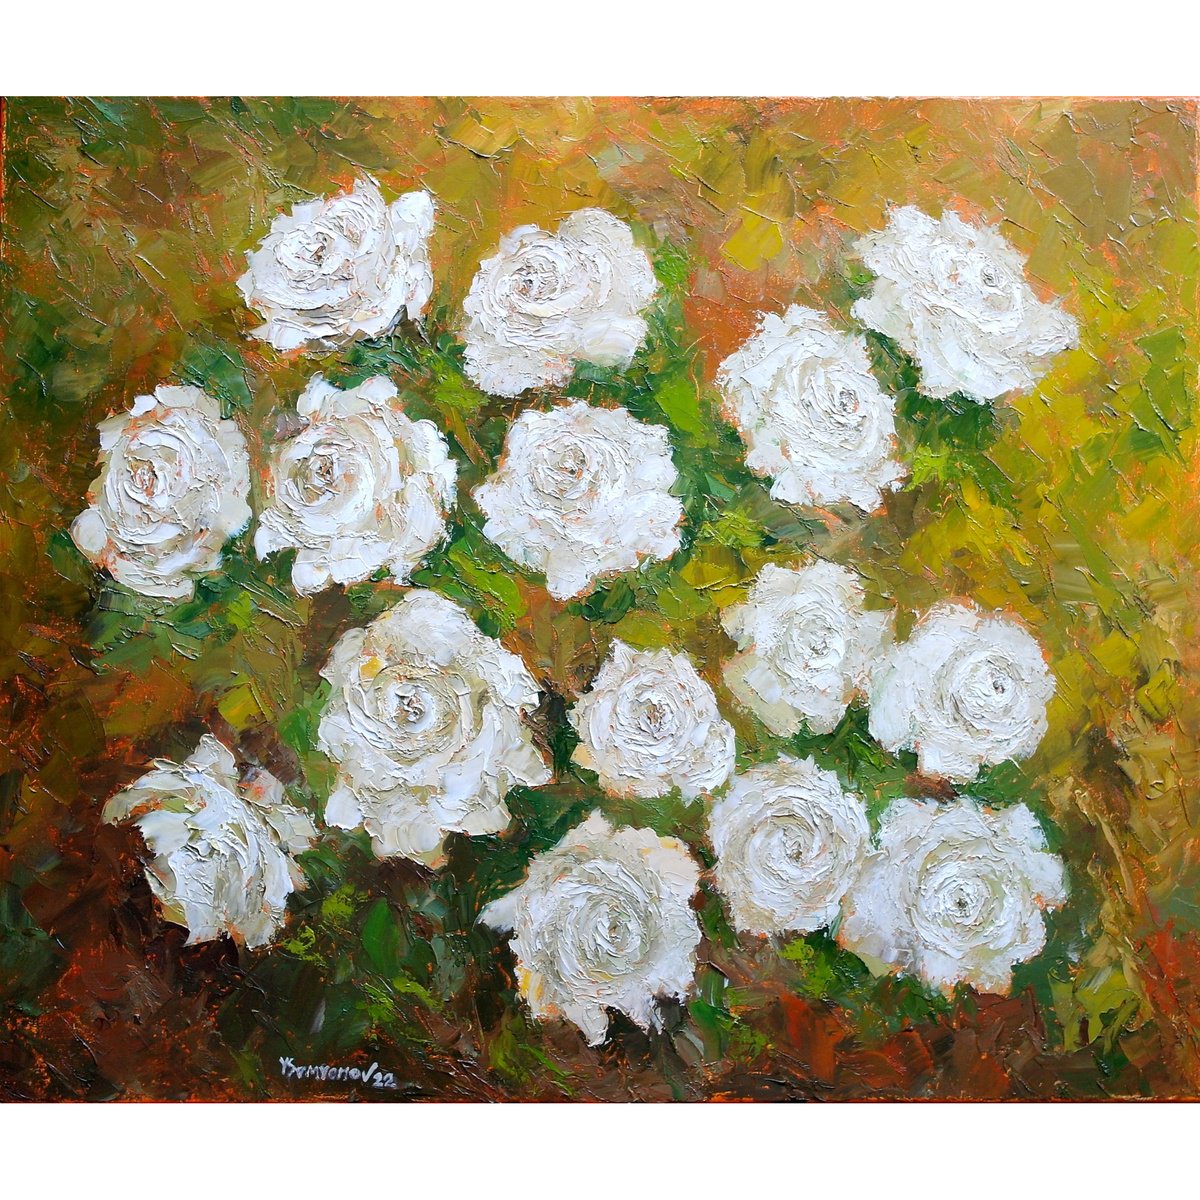 Wild White Roses by Juri Semjonov